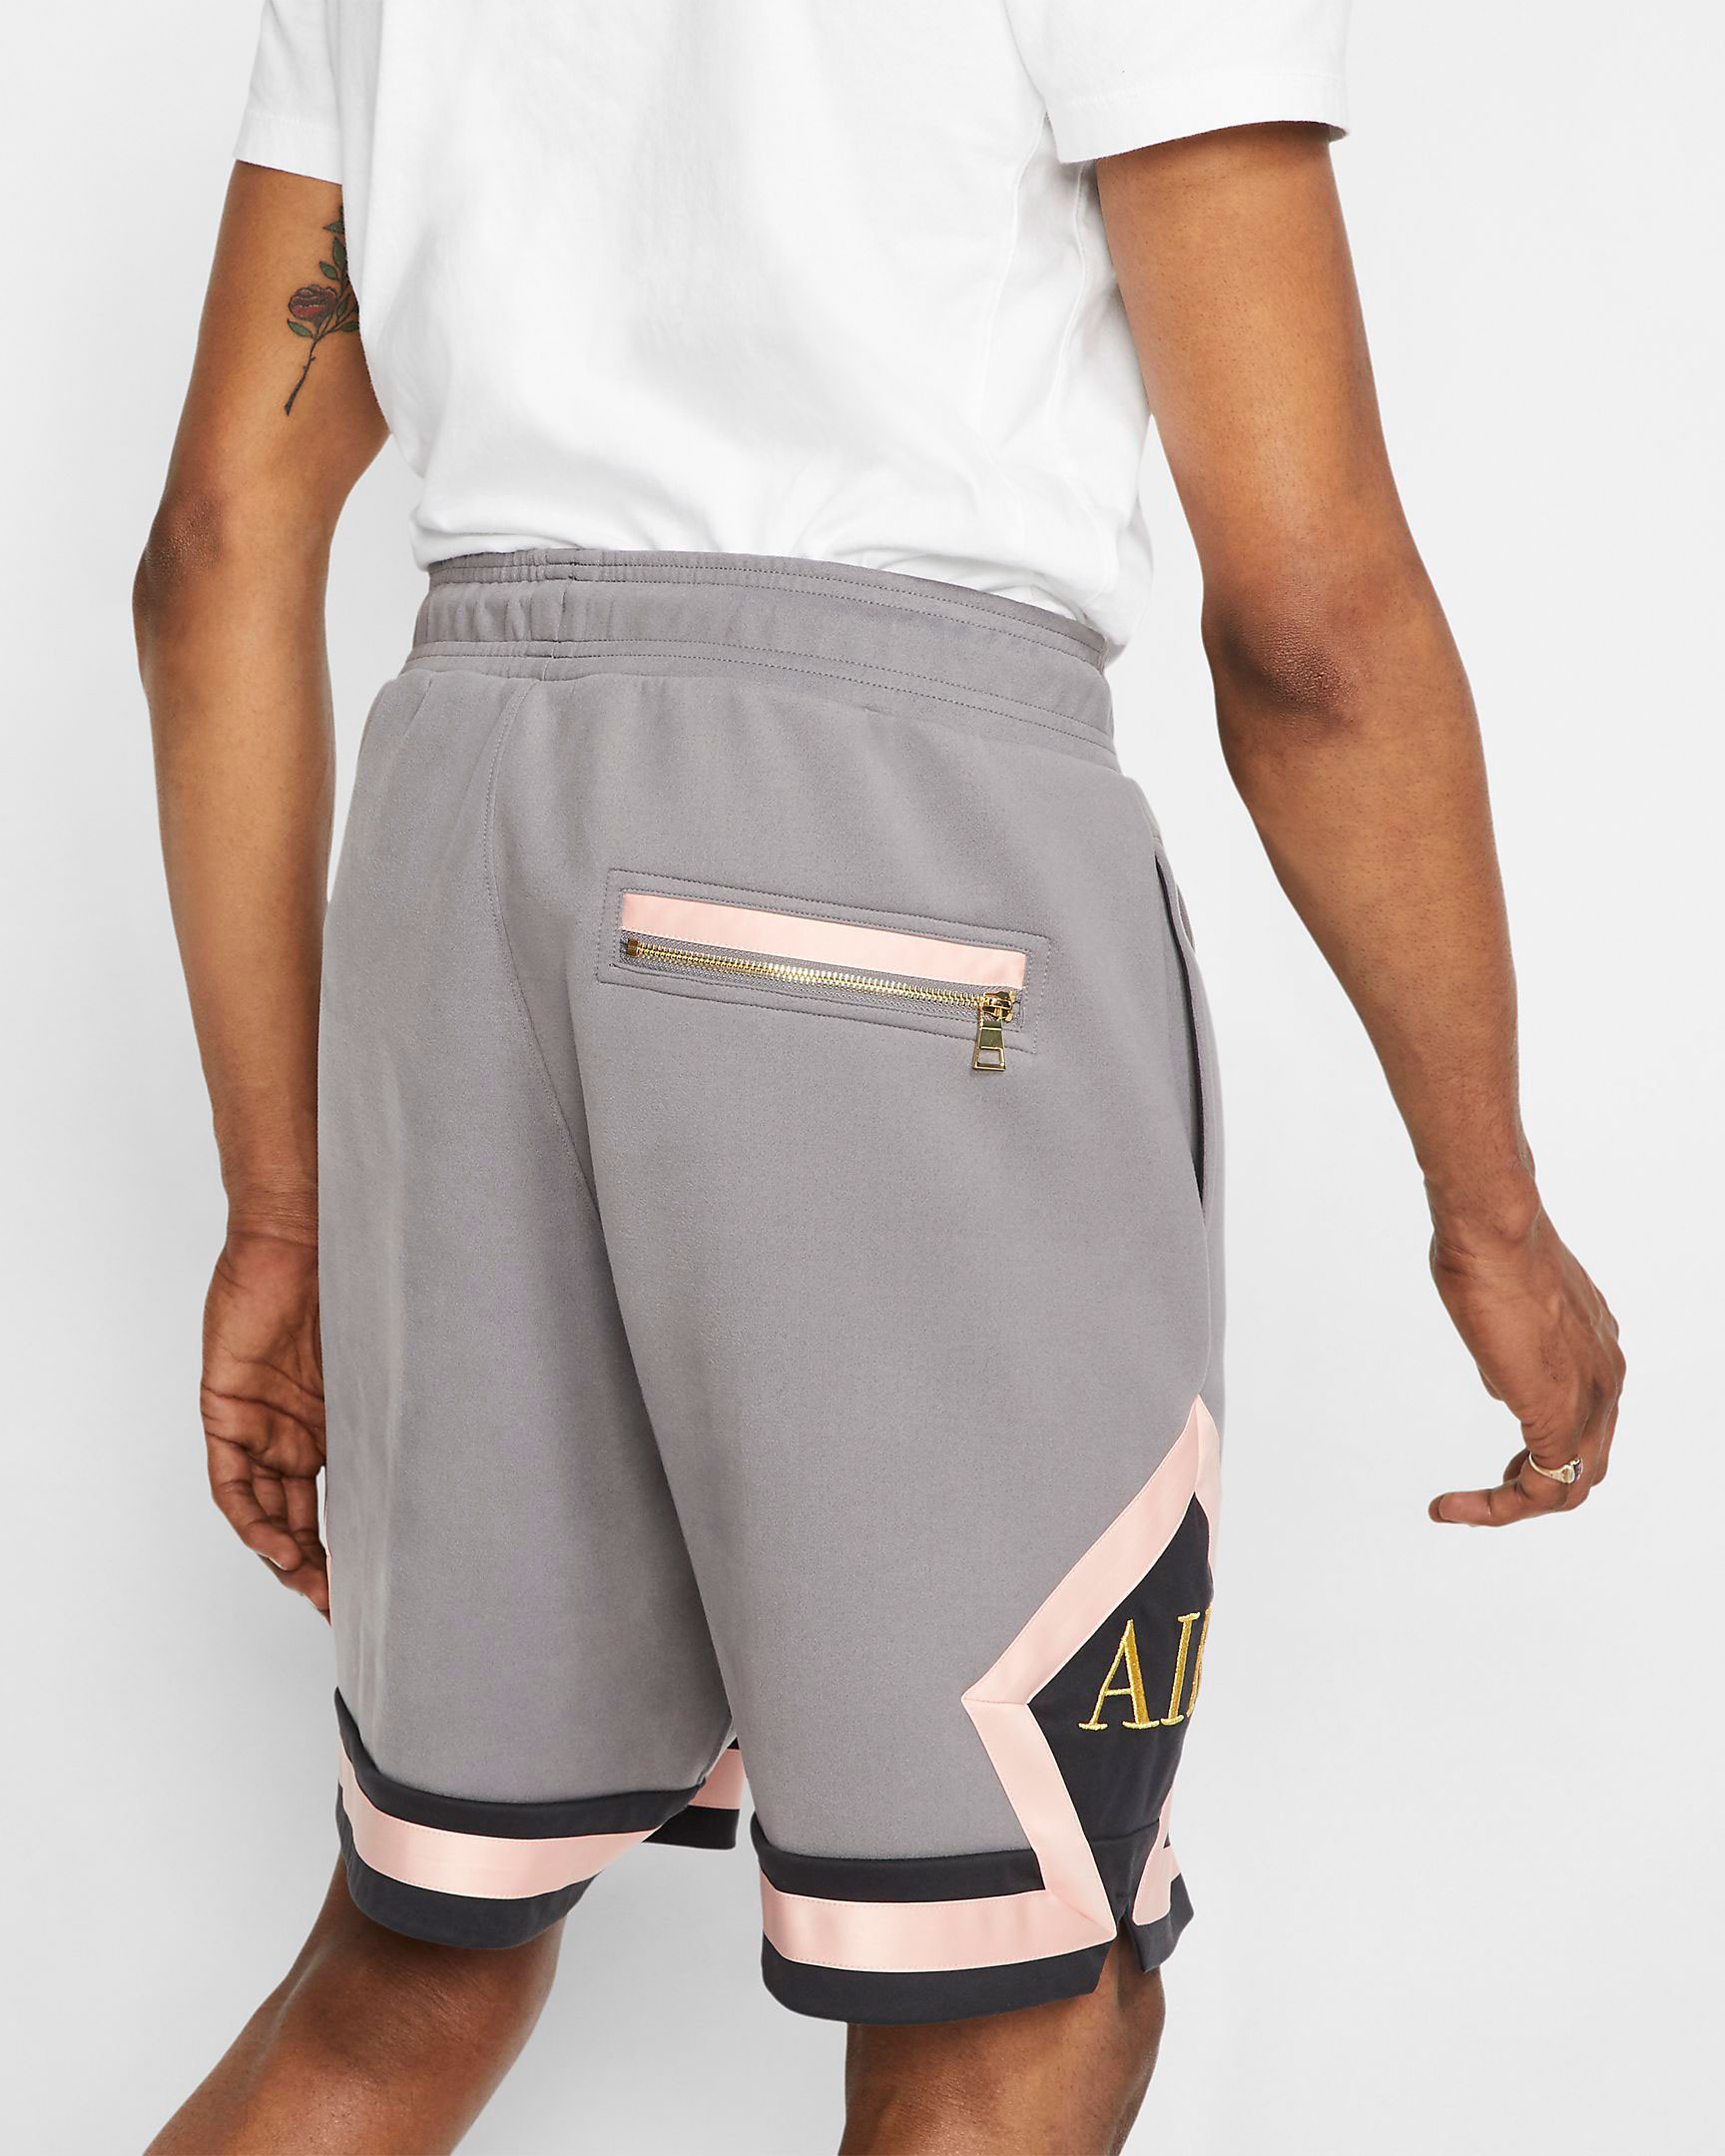 jordan-remastered-diamond-shorts-grey-pink-3.jpg